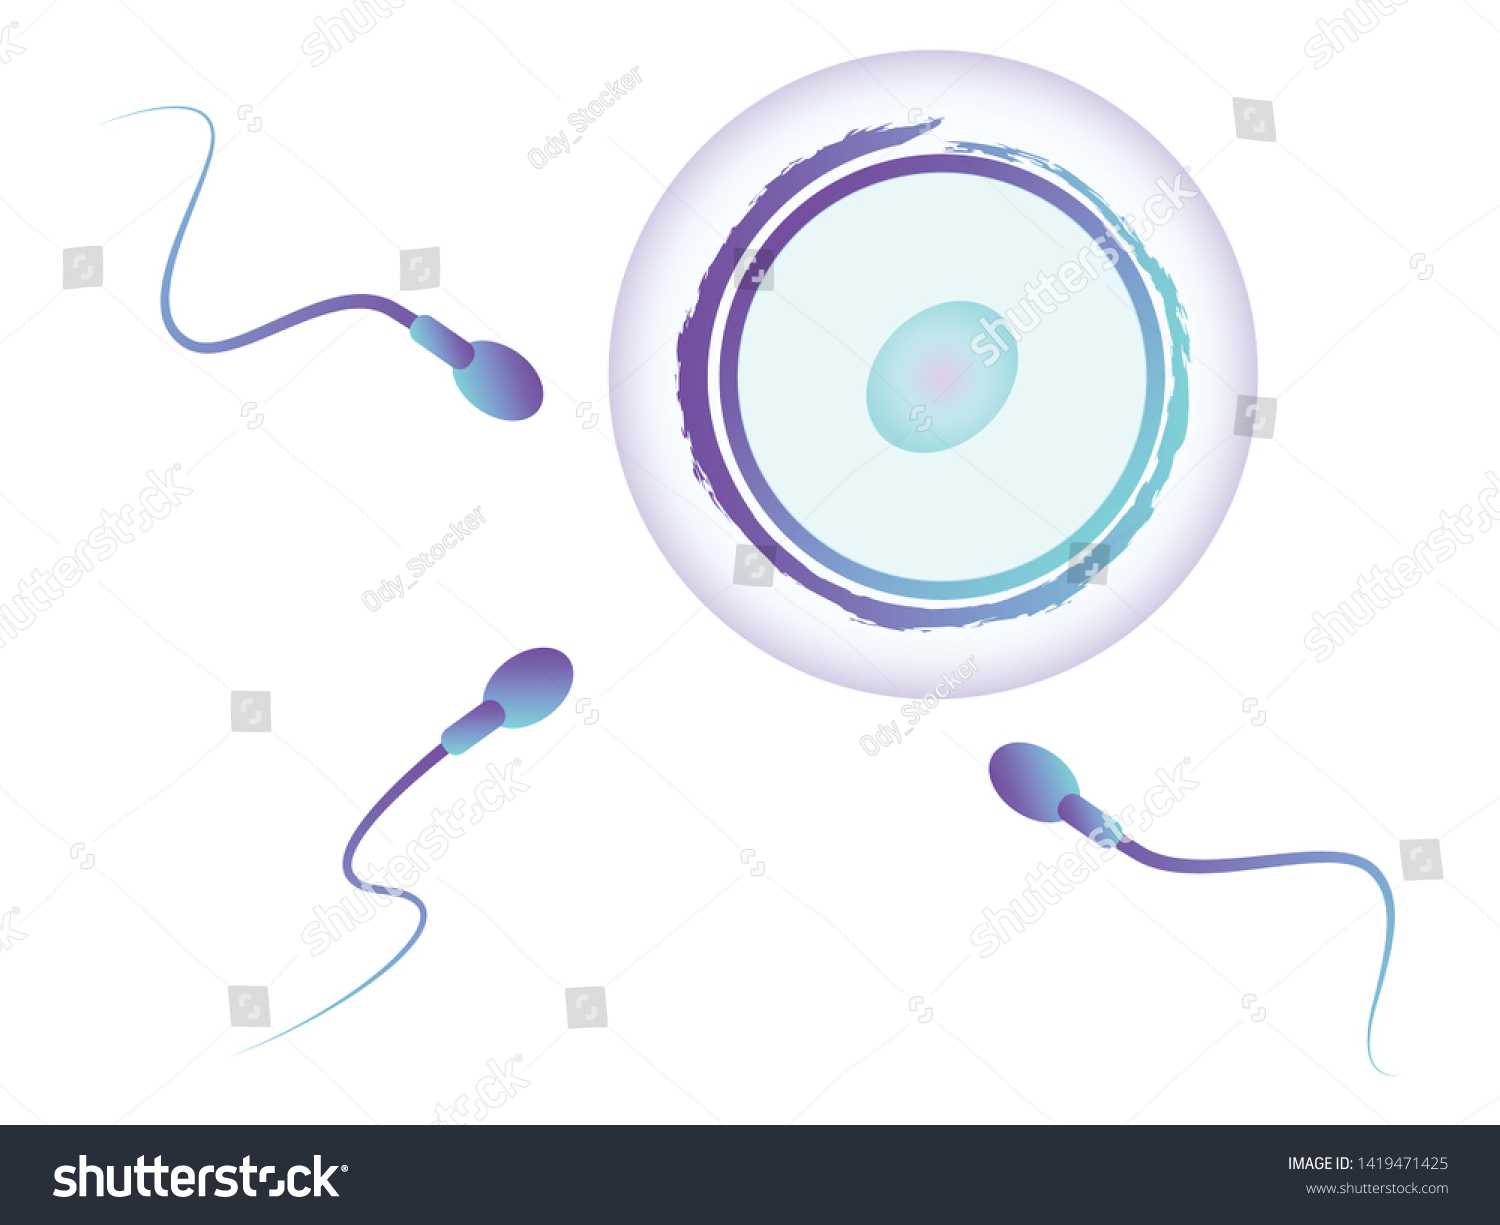 Human Natural Fertilization Sperm Egg Cell Stock Vector Royalty Free 1419471425 